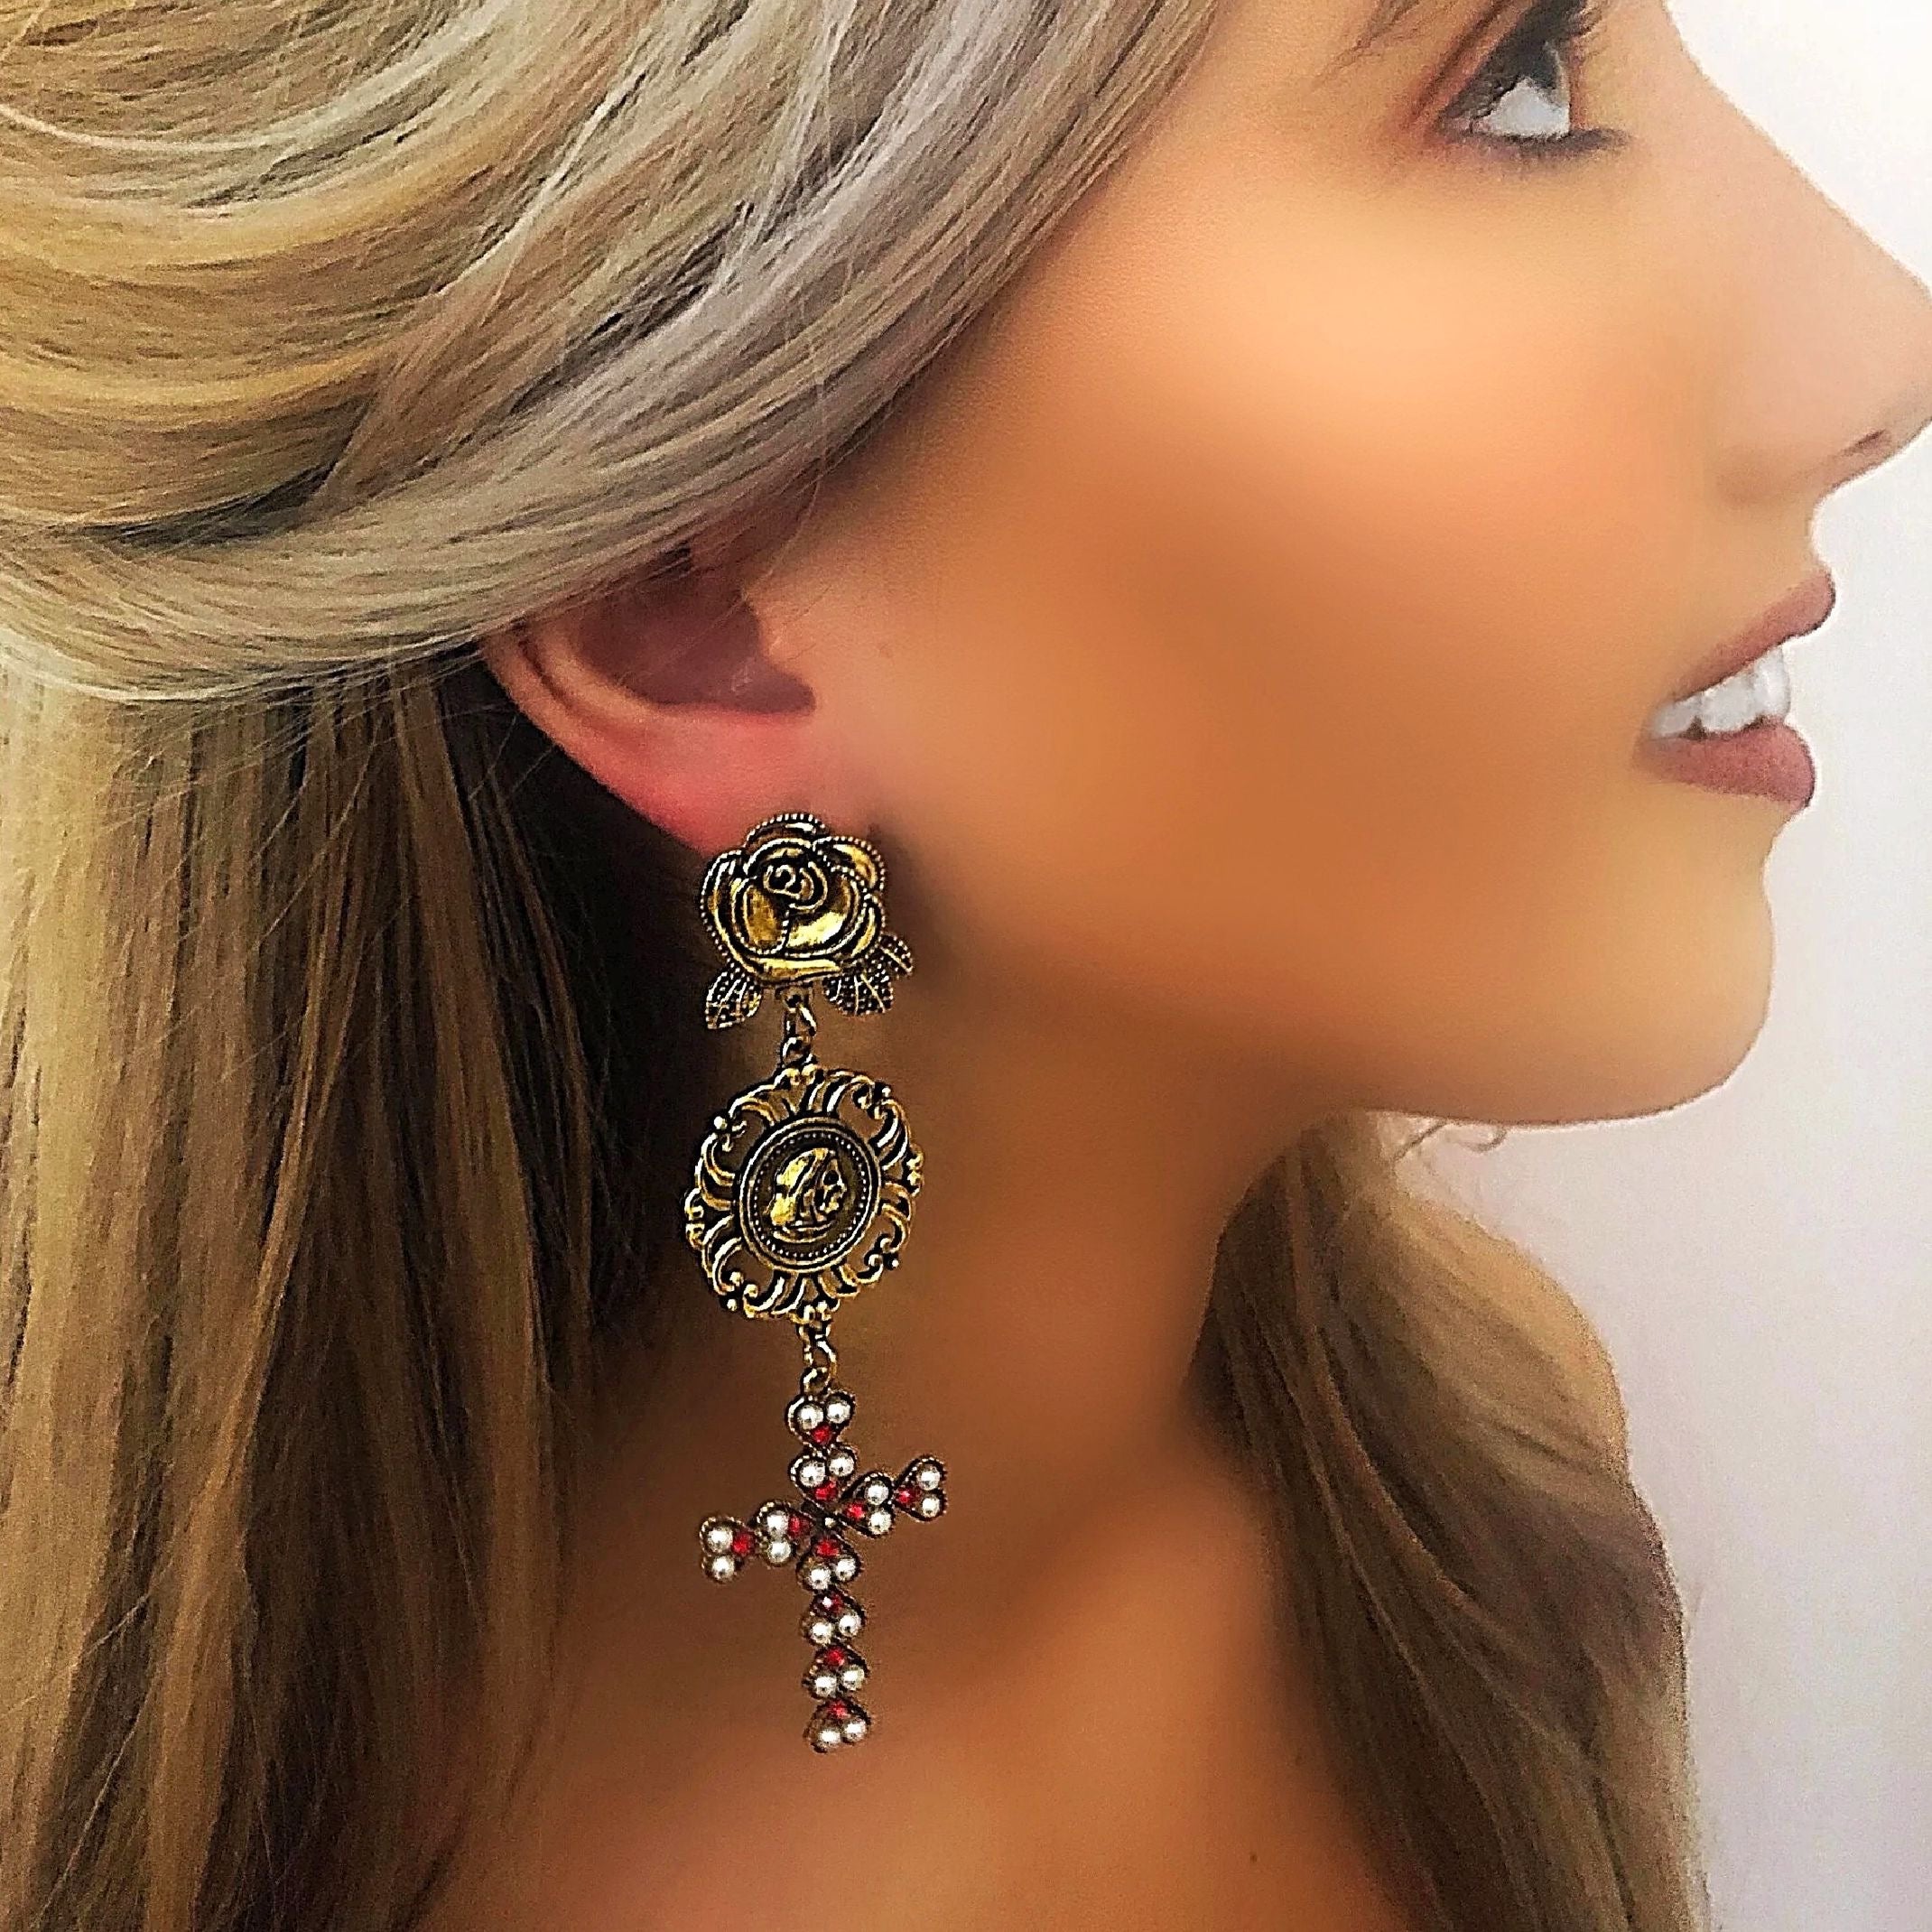 Gothic cross earrings 